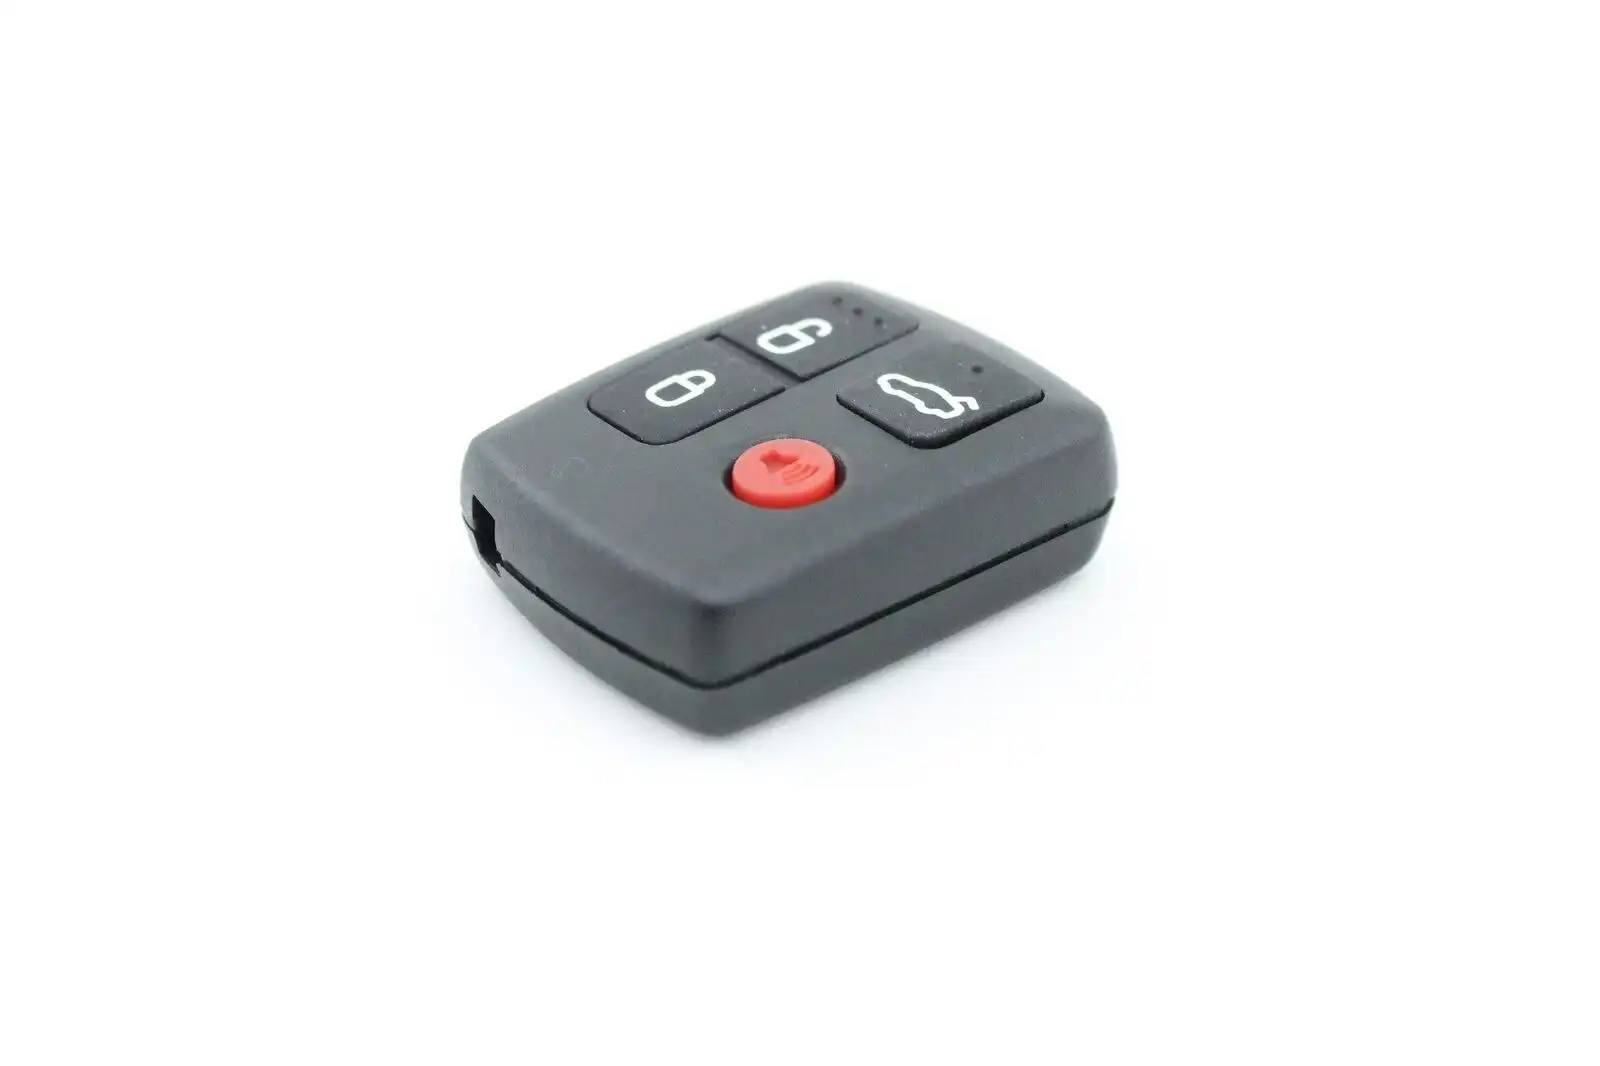 [Full Remote] Ford Remote BA/BF Falcon Sedan/Wagon Keyless Car Remote 4 Button Keypad